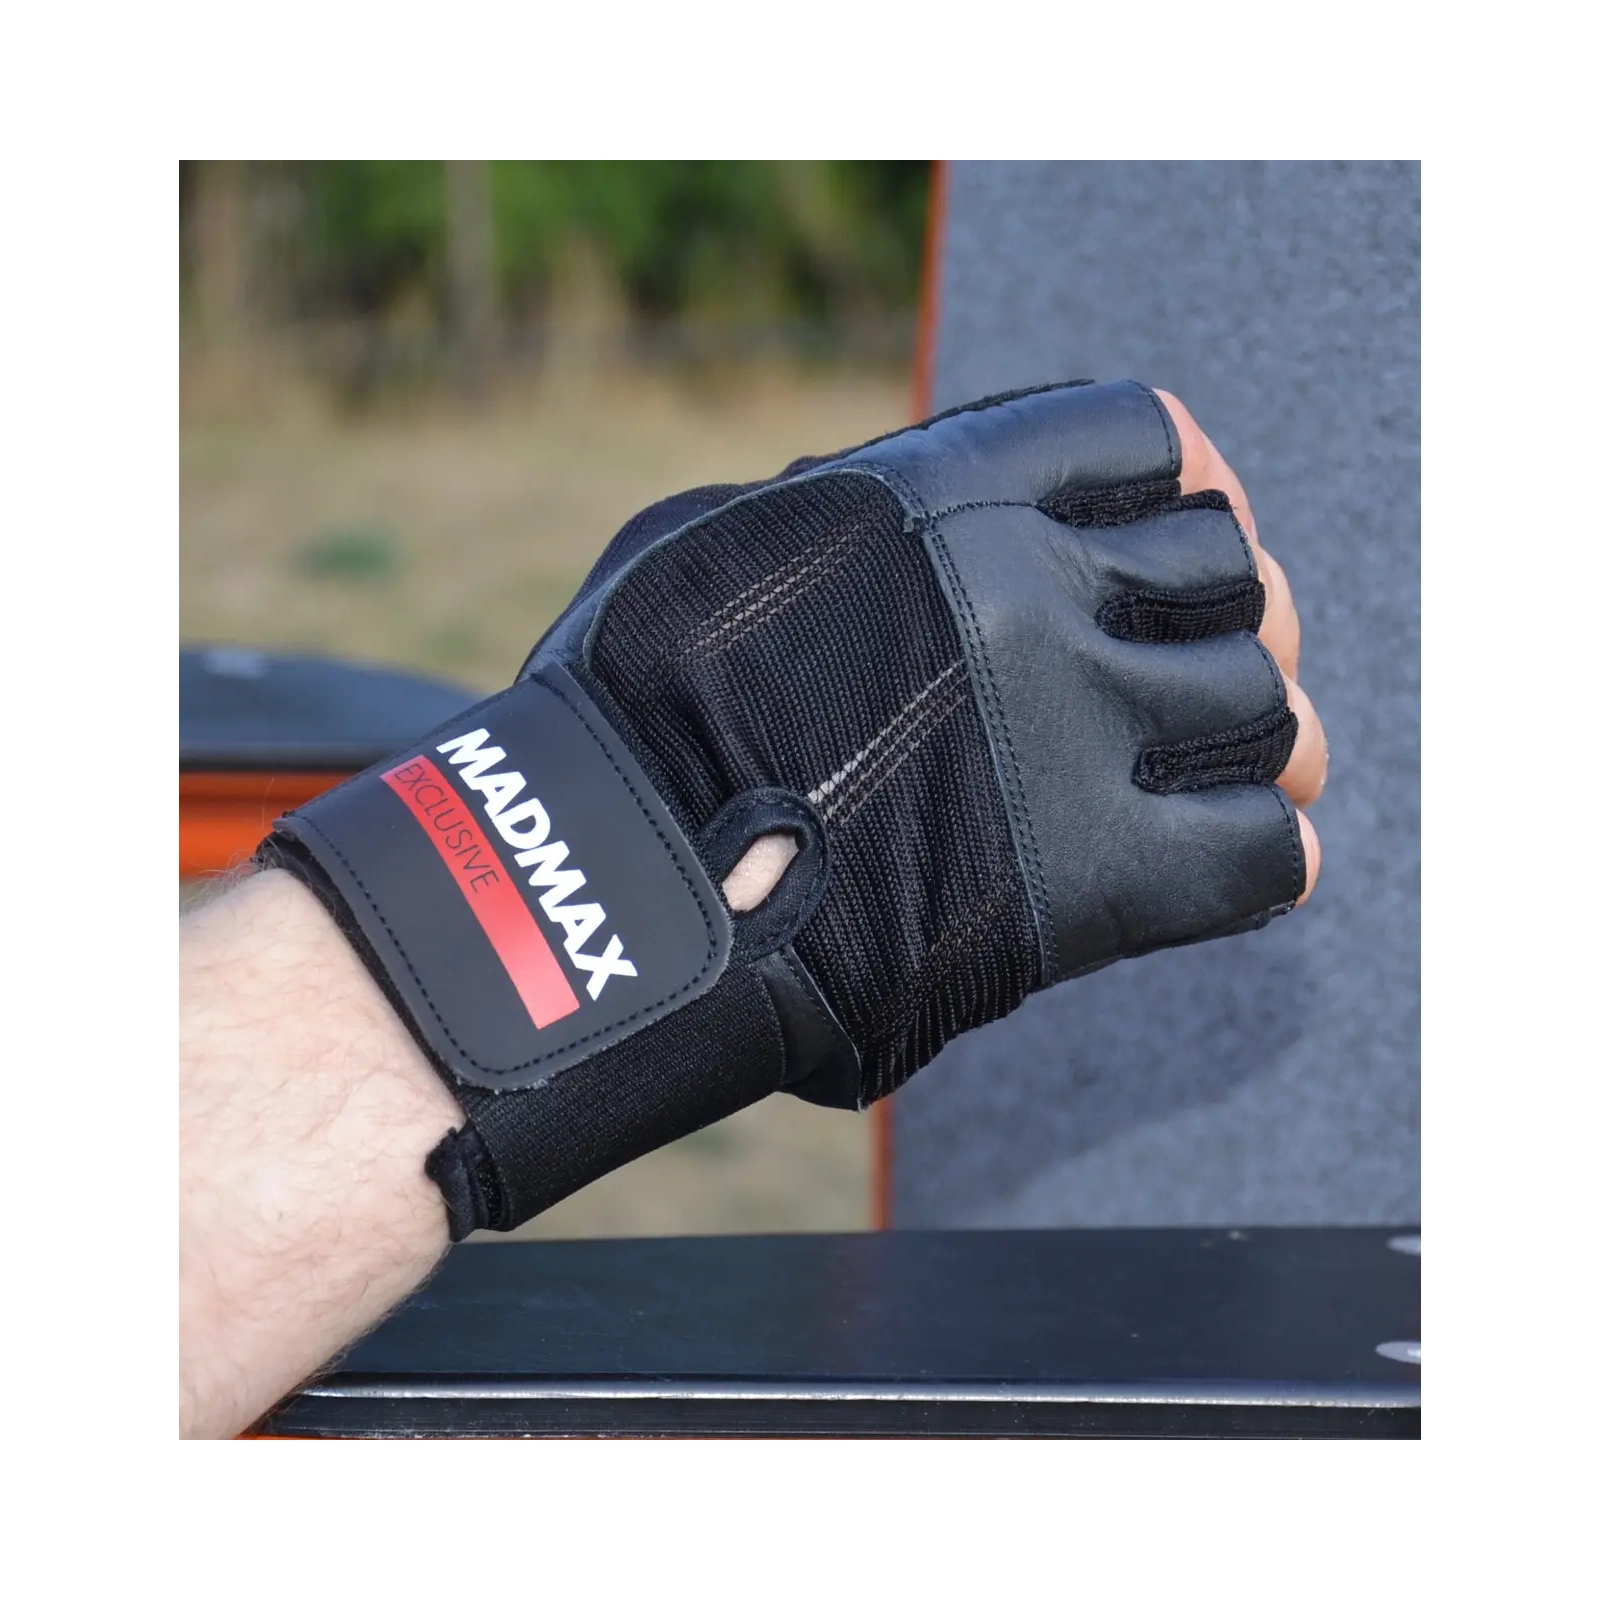 Перчатки для фитнеса MadMax MFG-269 Professional Exclusive Black XXL (MFG-269-Black_XXL) изображение 2